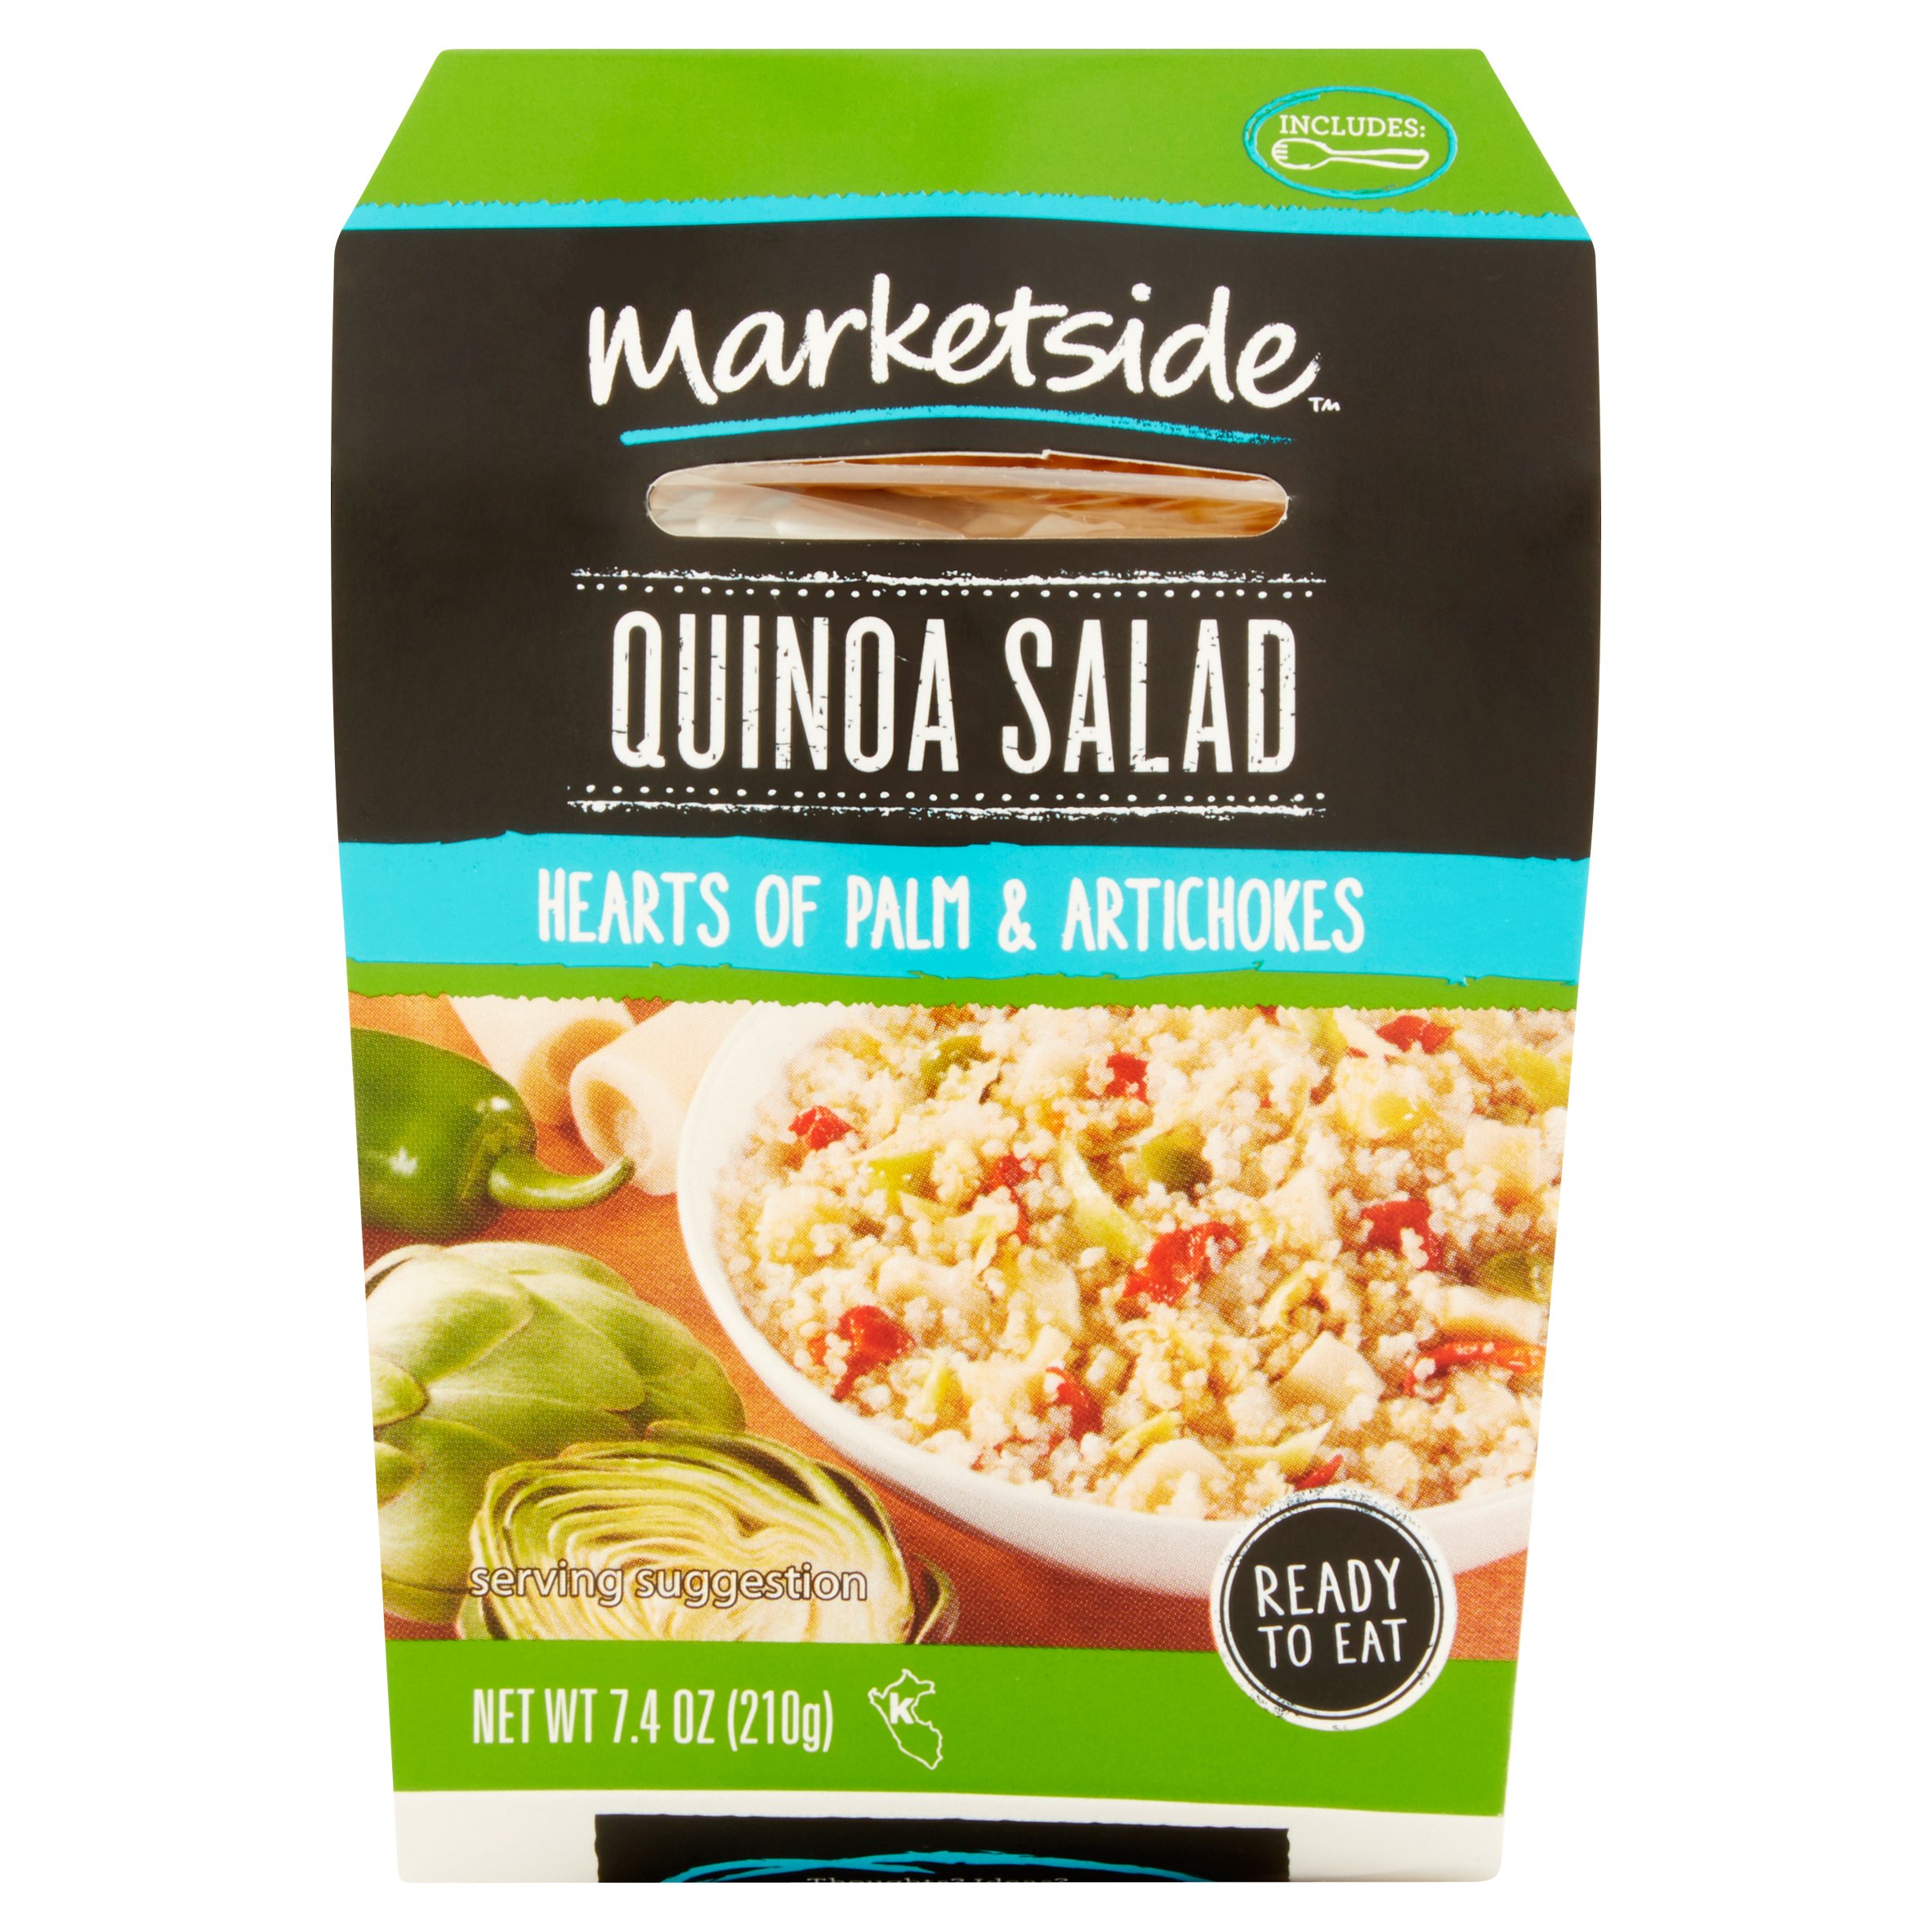 Marketside Hearts of Palm & Artichokes Quinoa Salad, 7.4 Oz